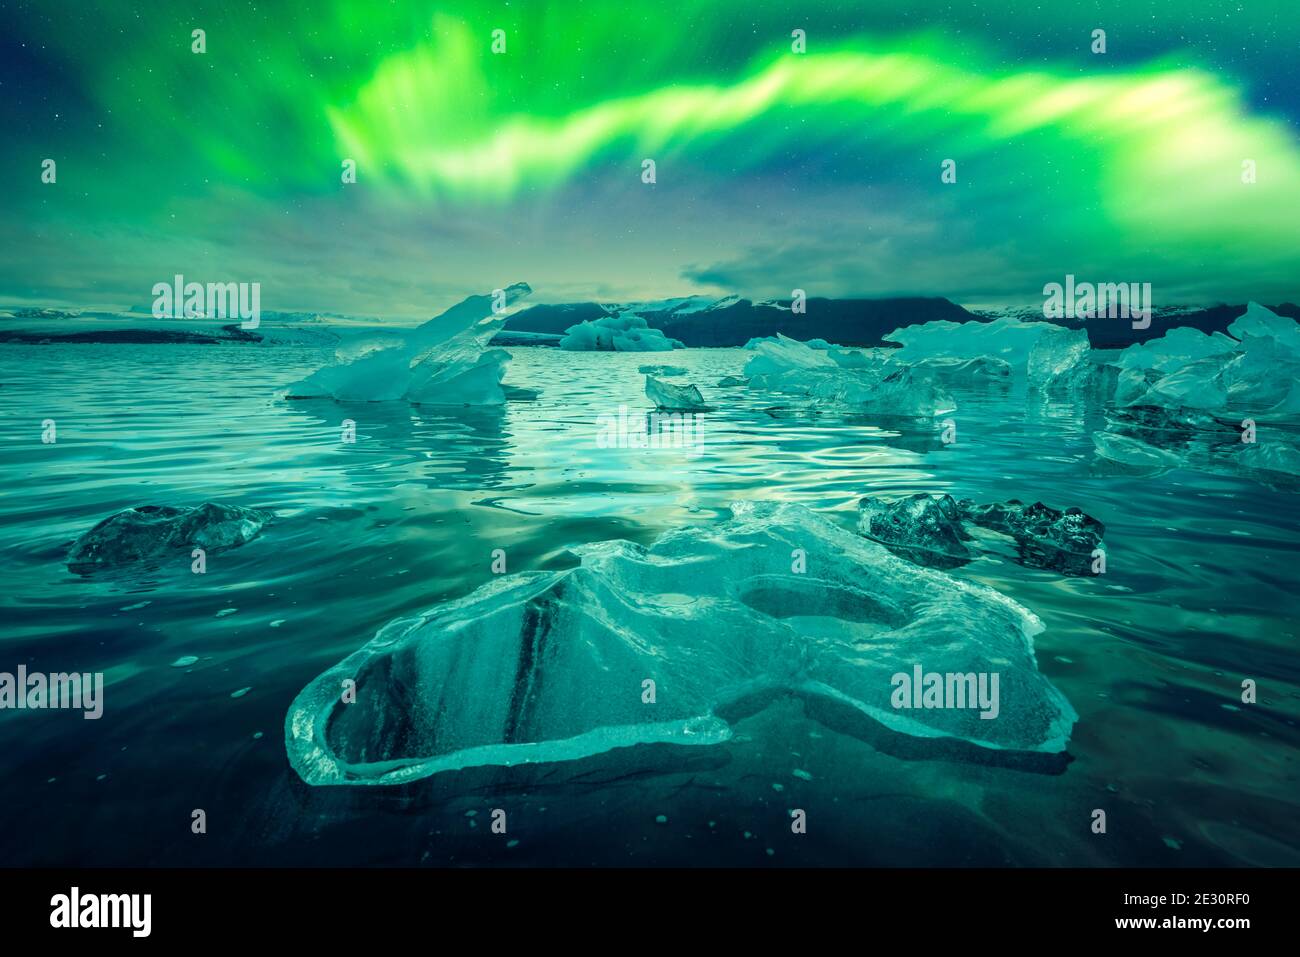 Iceland northern lights hi-res stock images - Alamy